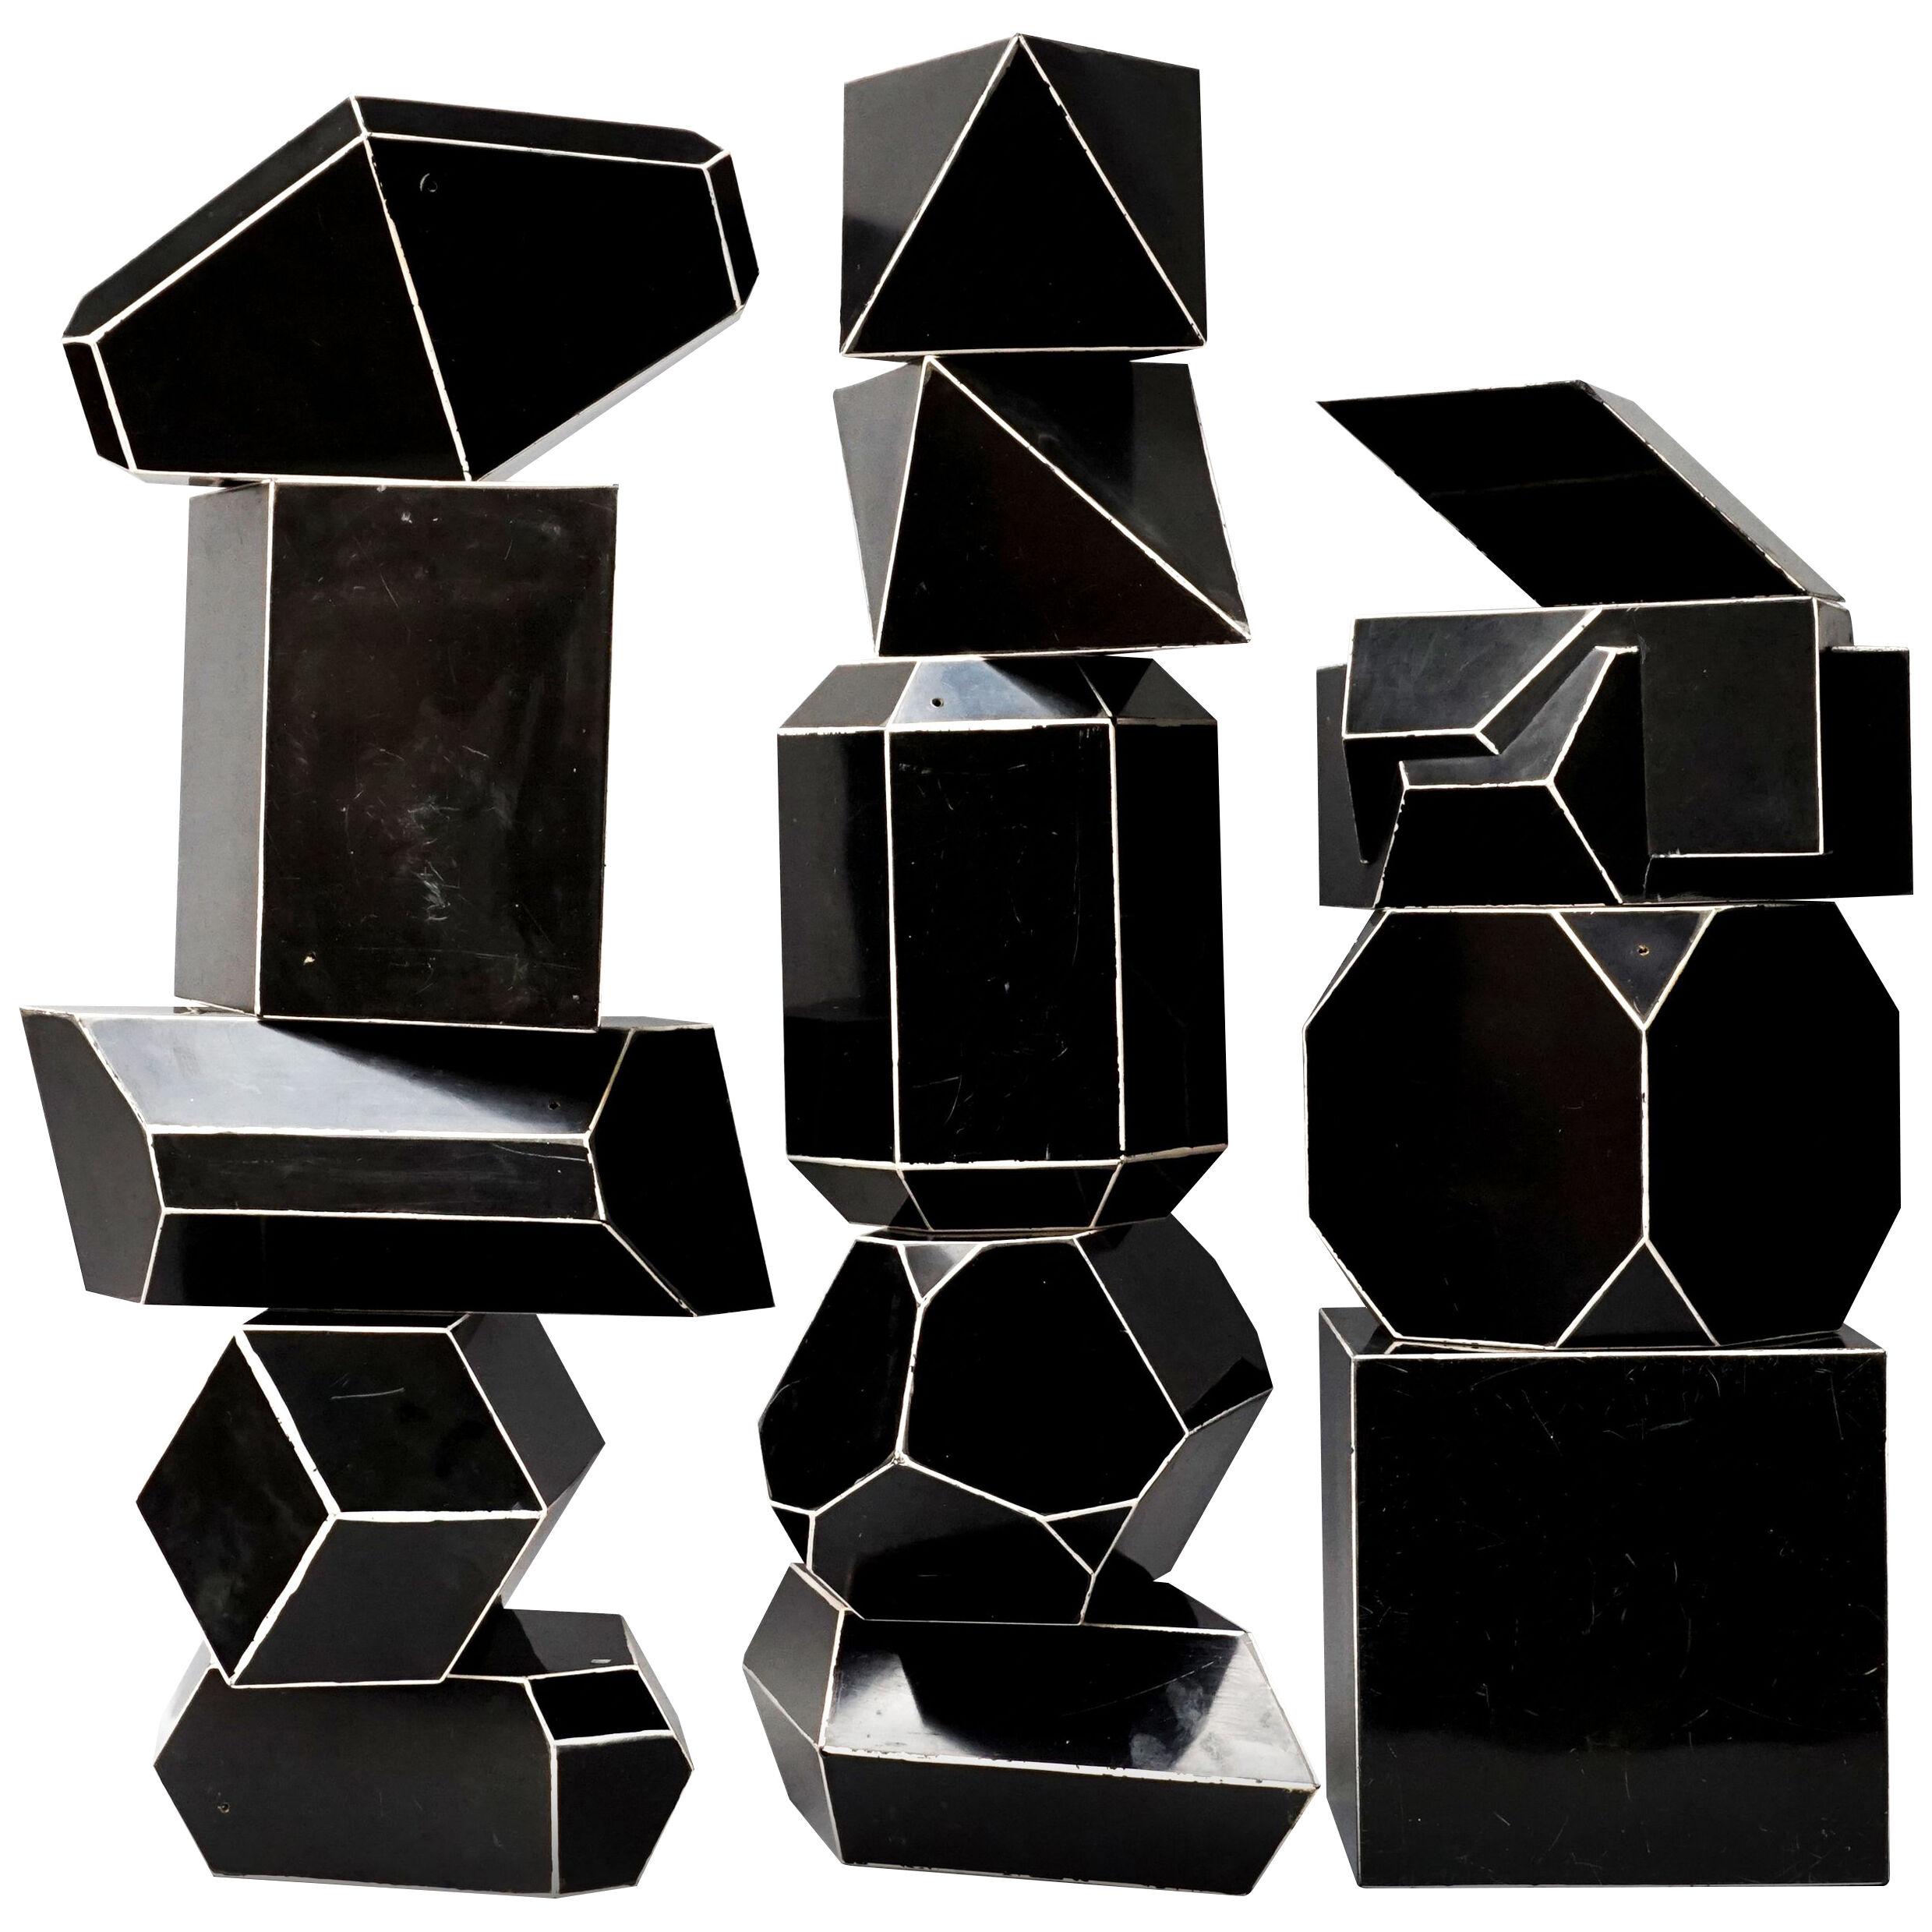 Fourteen French Geometric Bakelite Art Deco Science Classroom Crystal Models